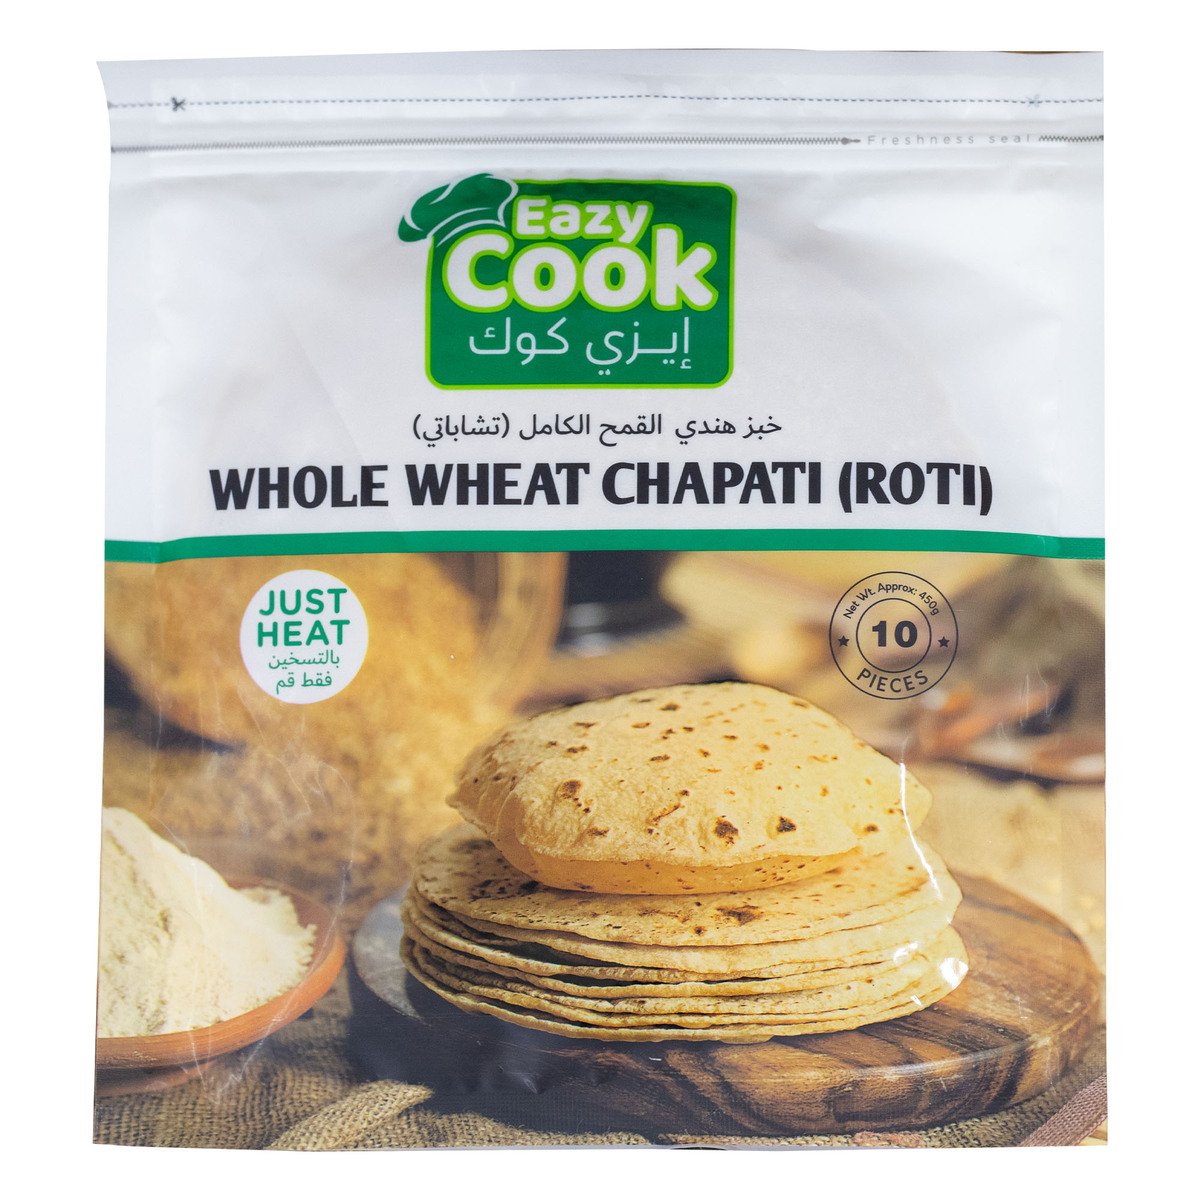 Eazy Cook Whole Wheat Chapathi (Roti) 10 pcs